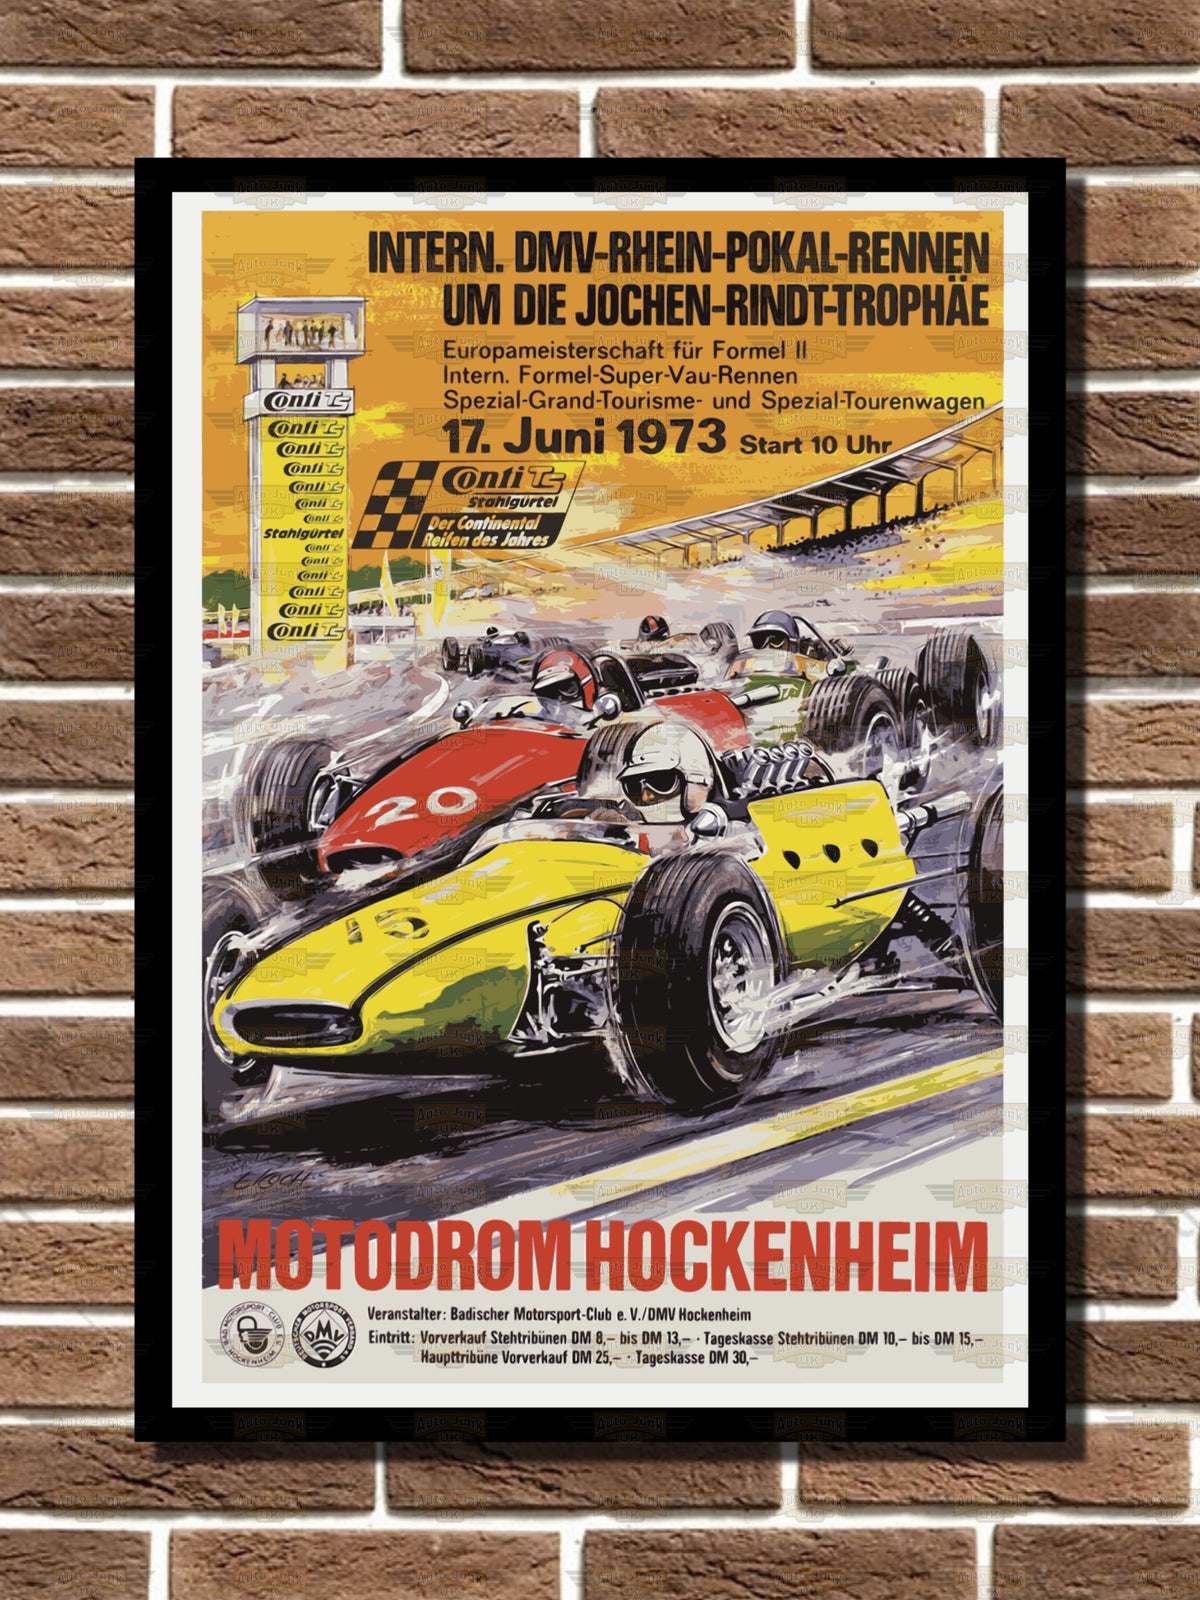 Hockenheim Jochen Rindt Trophy Metal Sign